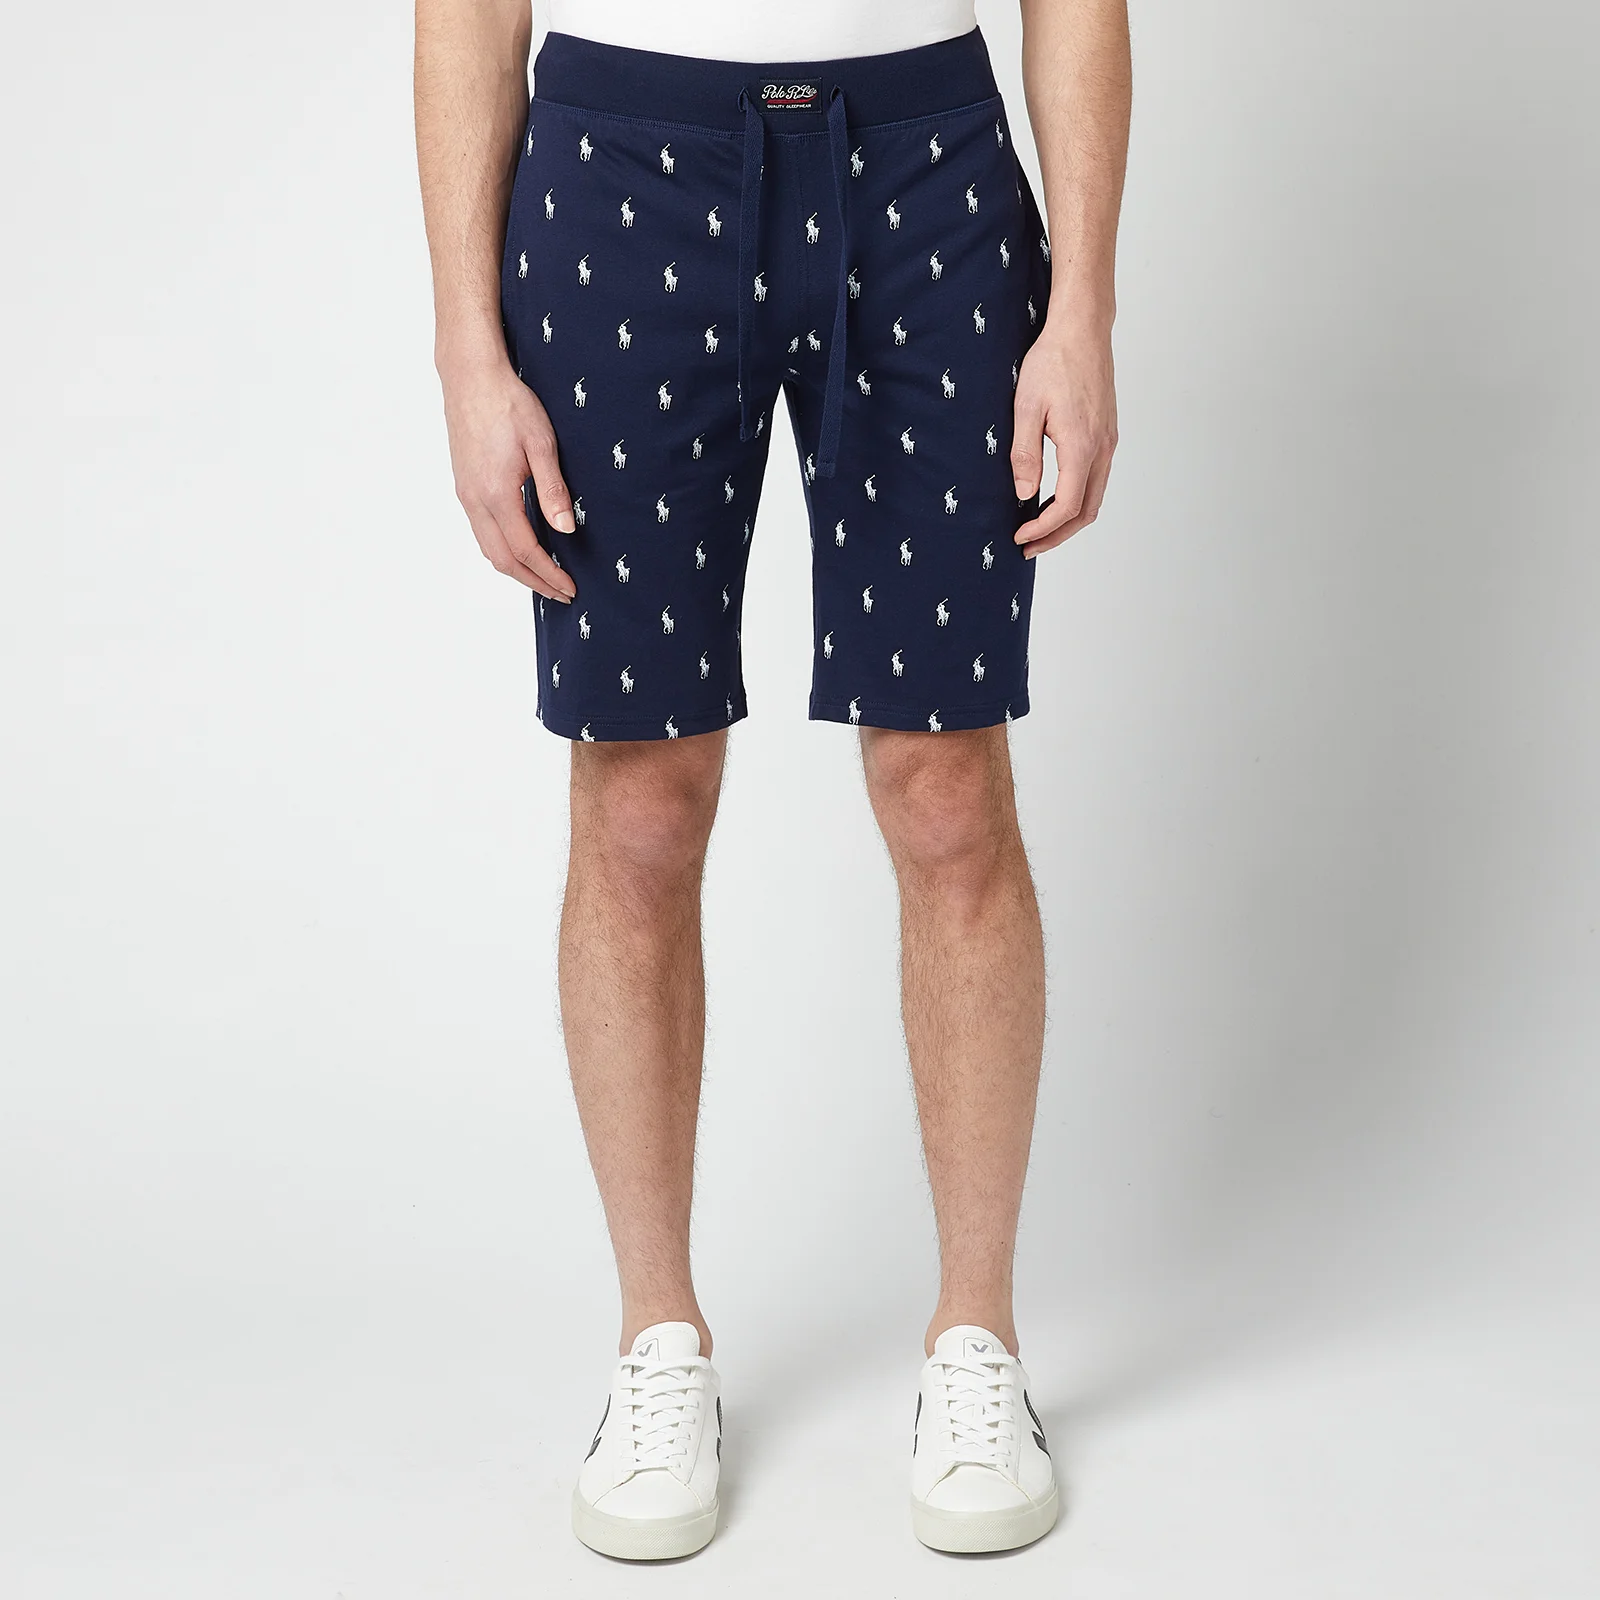 Polo Ralph Lauren Men's All Over Print Slim Shorts - Cruise Navy - S Image 1